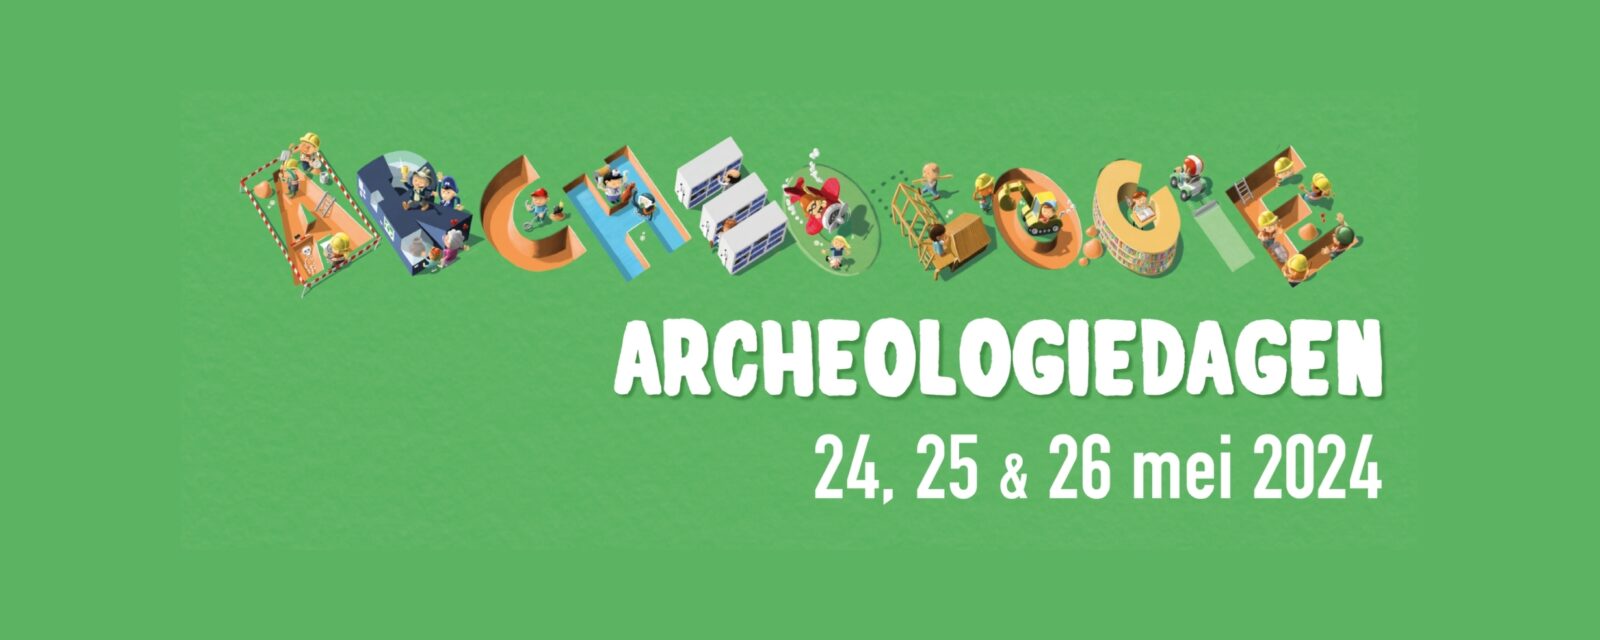 Banner Archeologiedagen 2024